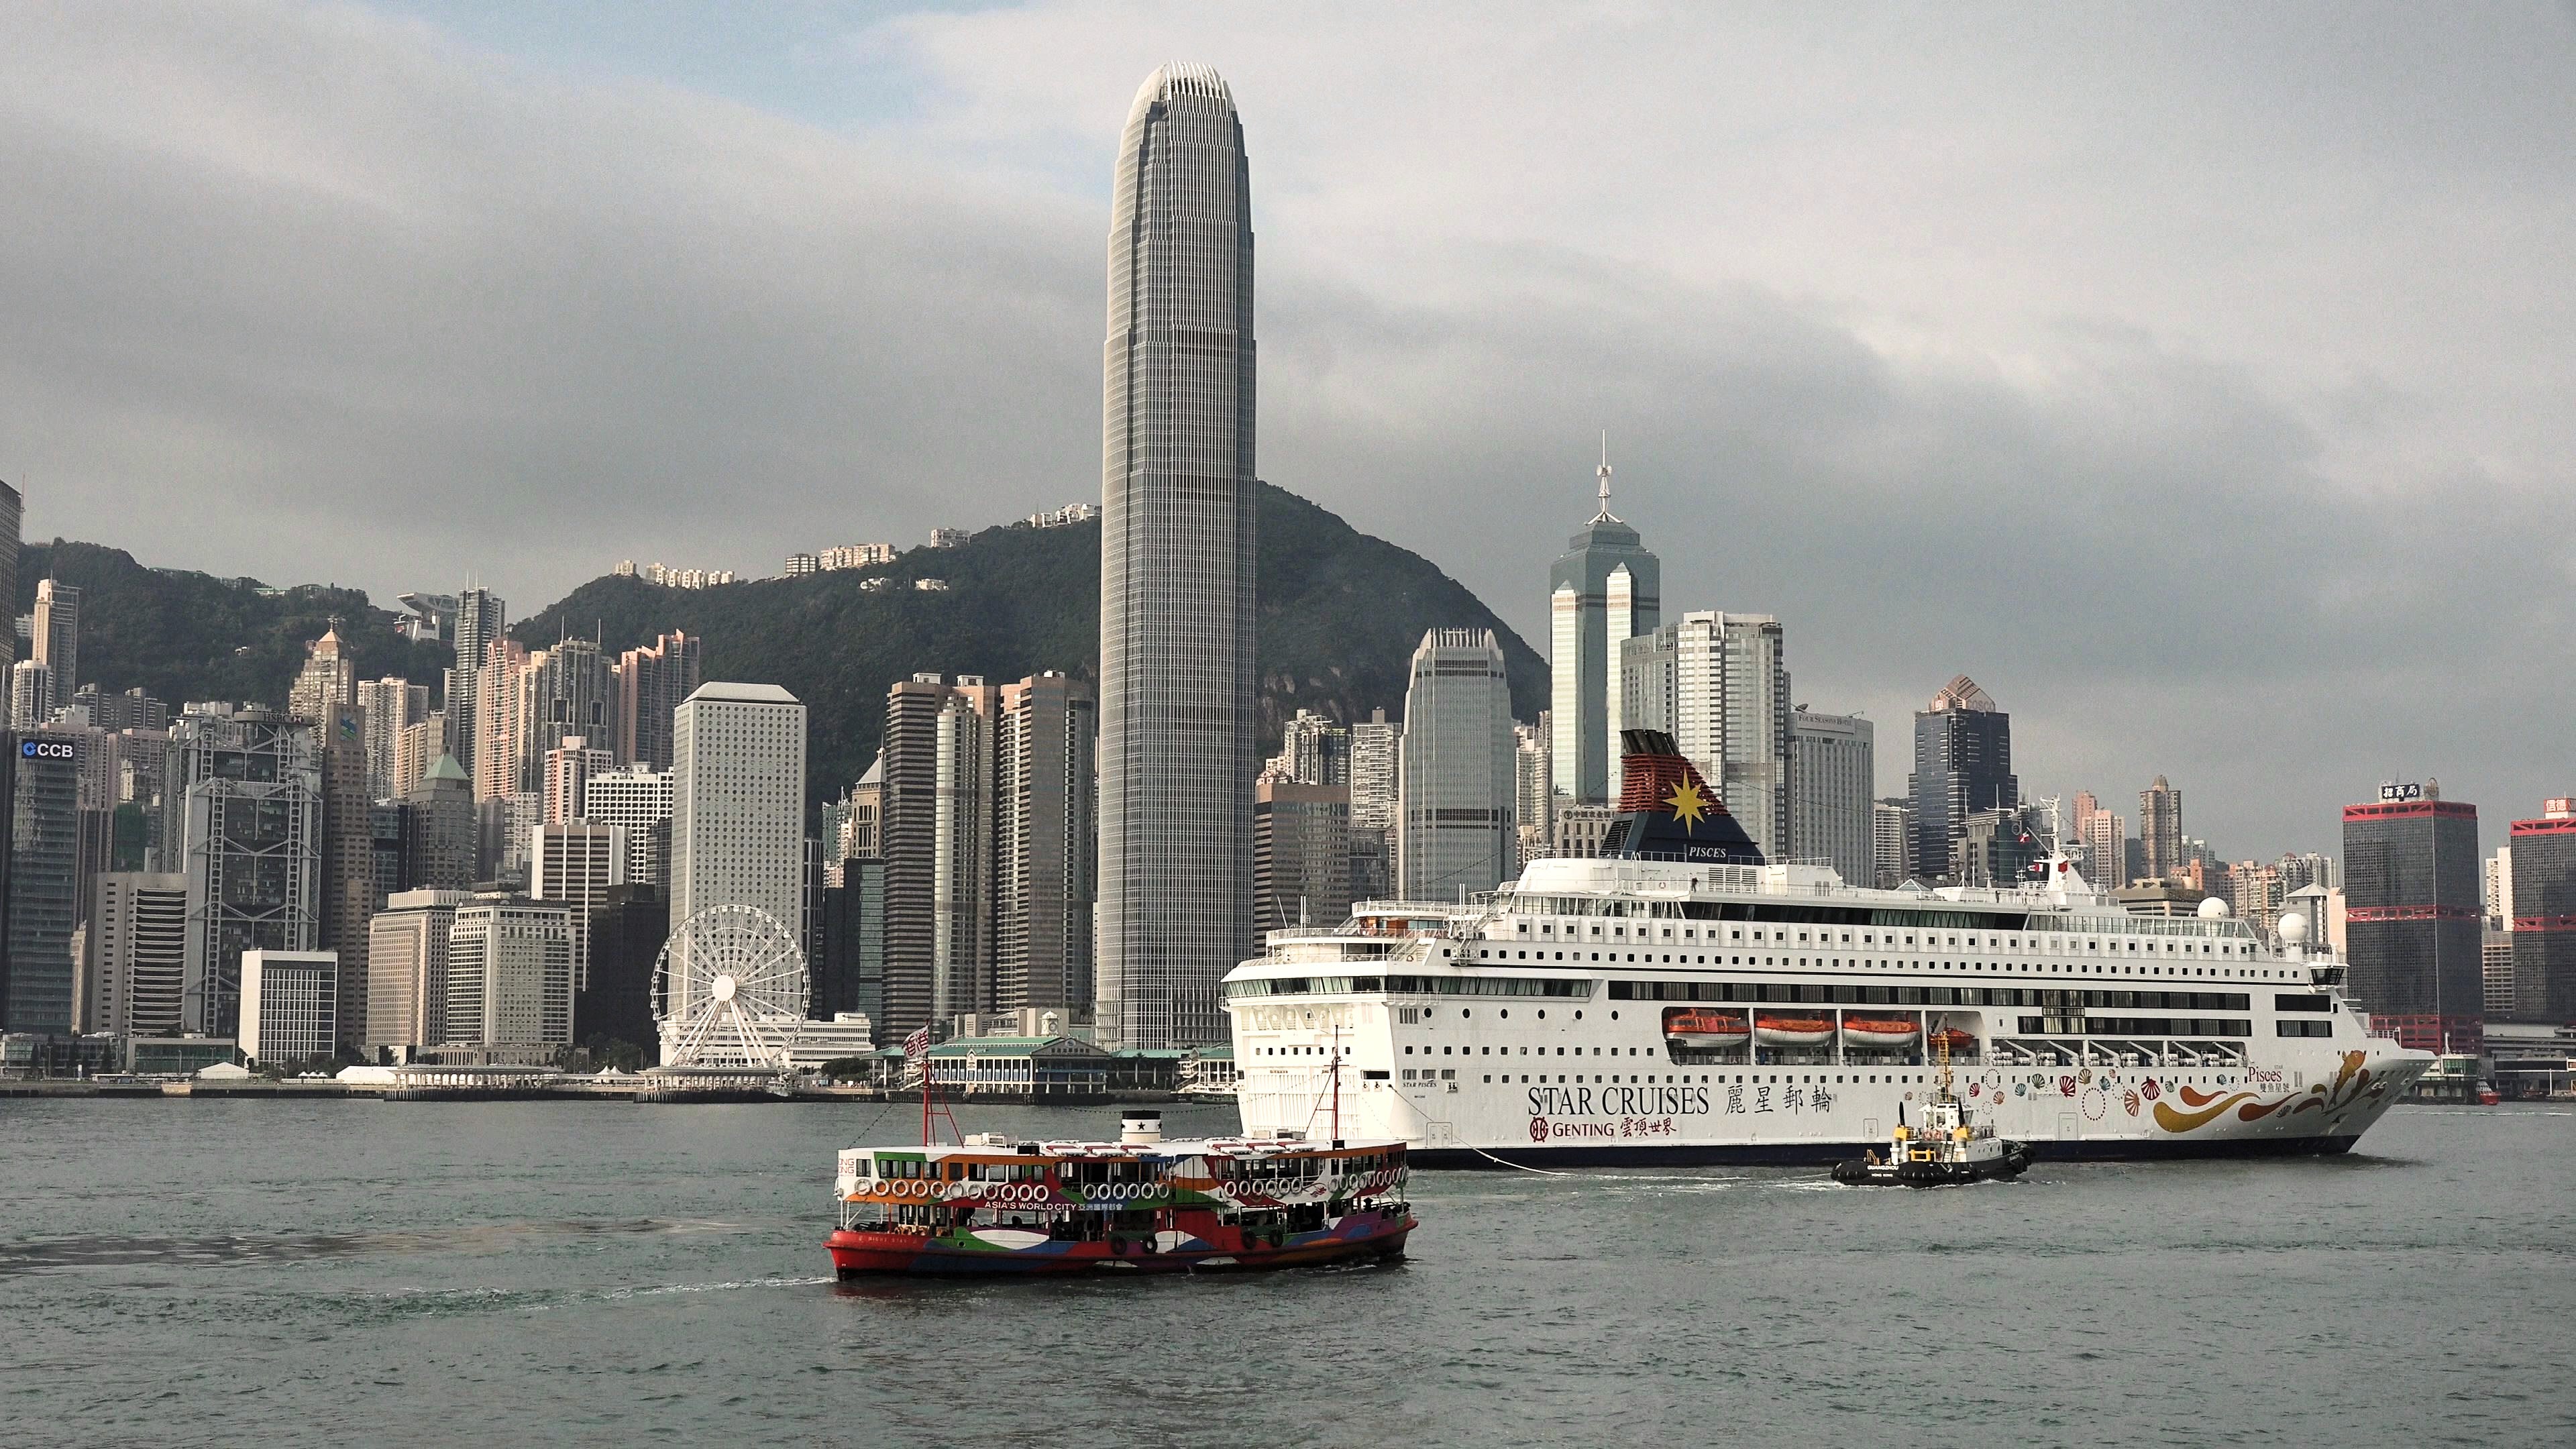 Hong Kong Skyline in 4K (Ultra HD) - YouTube